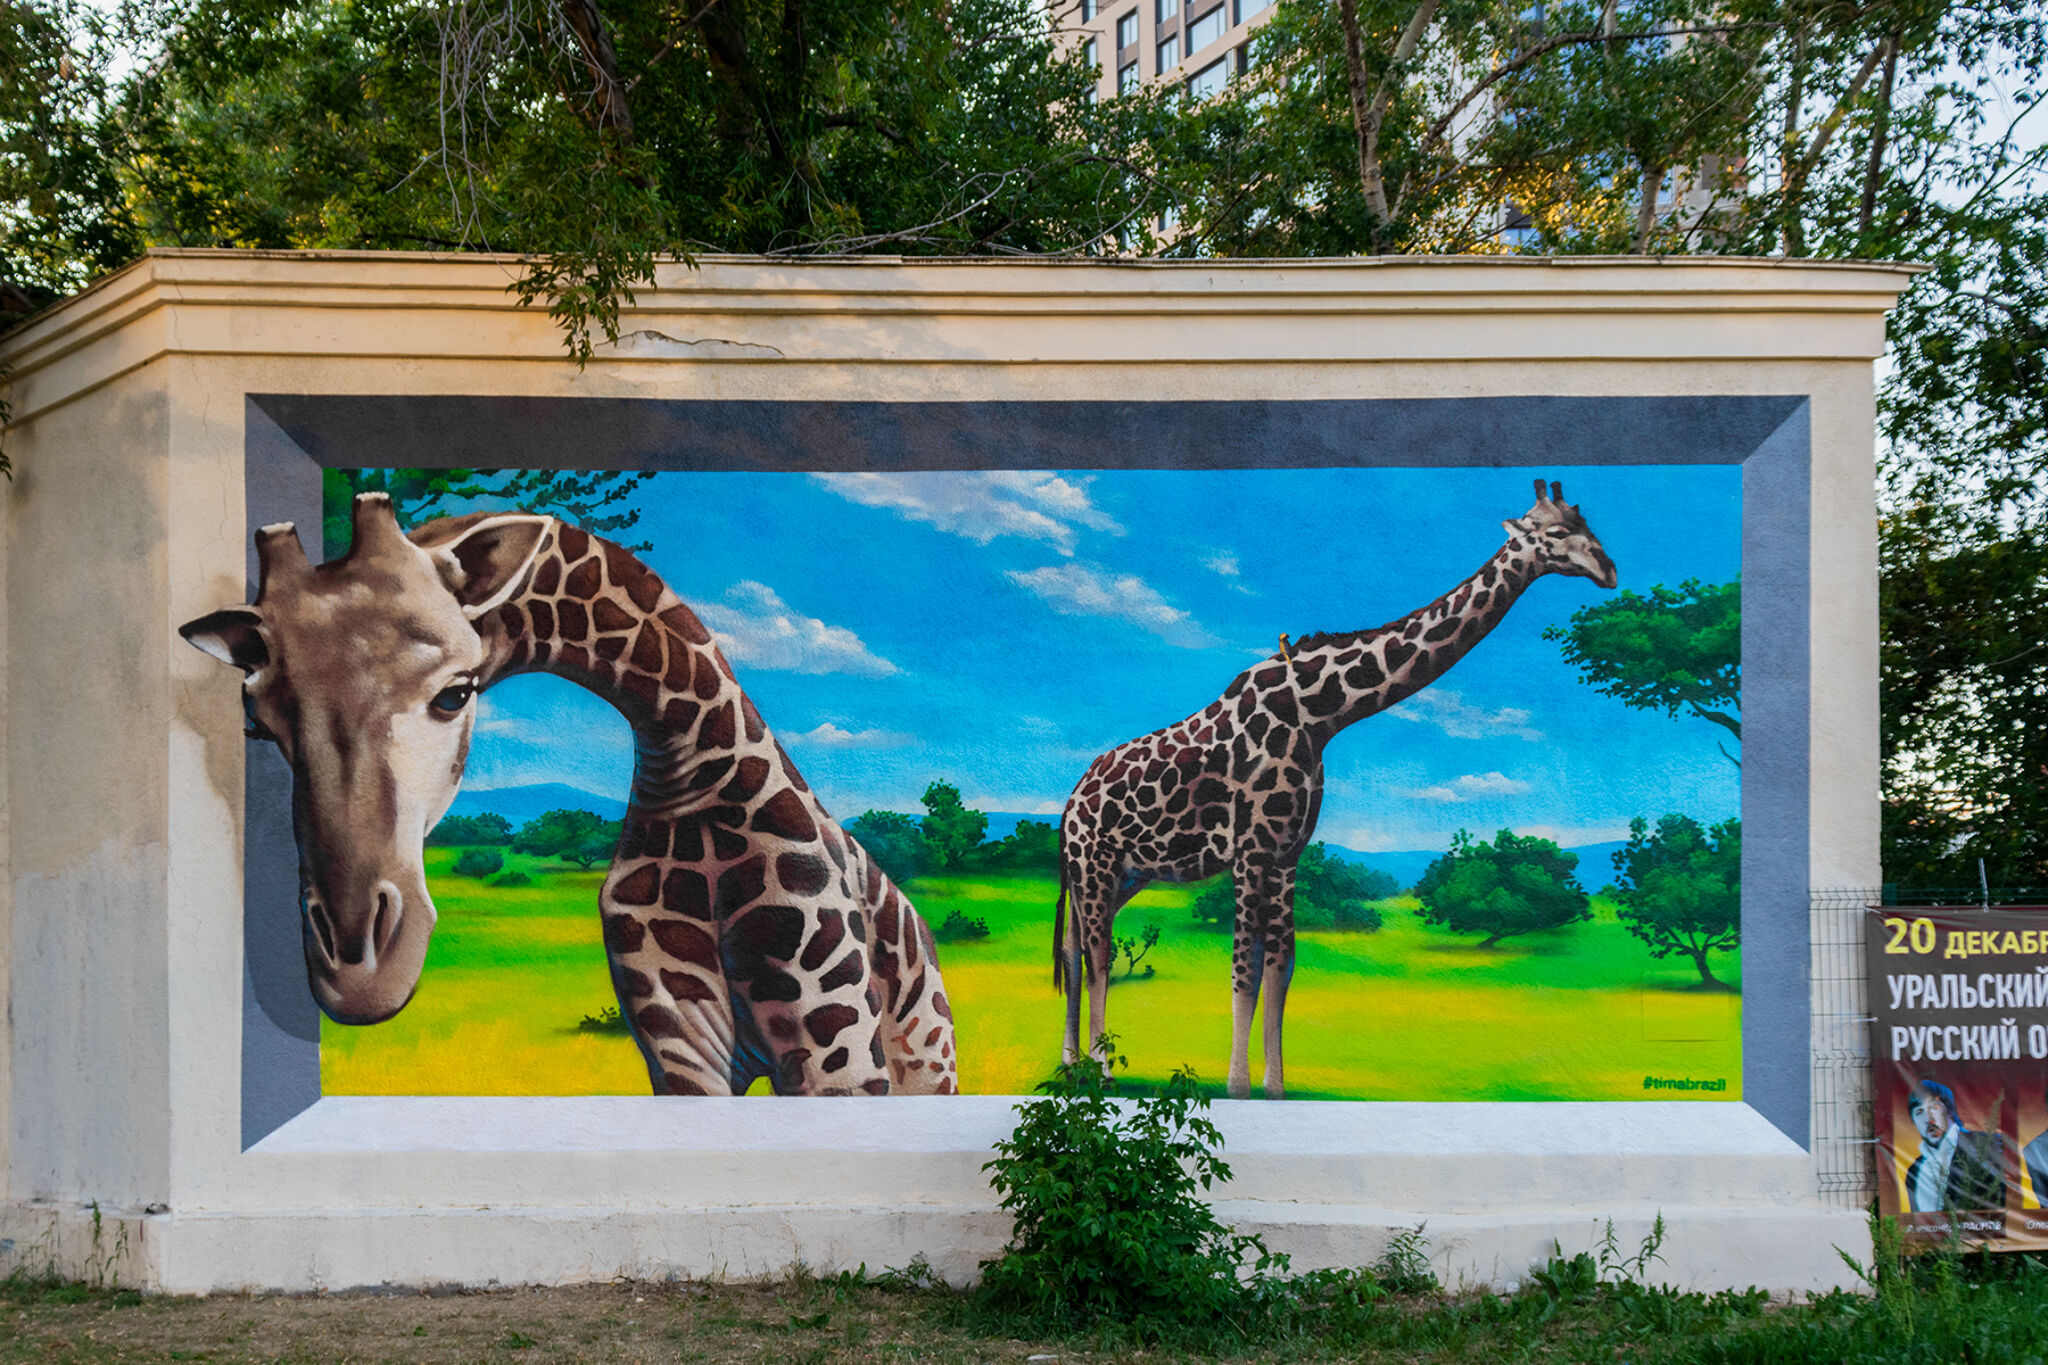 Timur Brazil&mdash;Giraffes